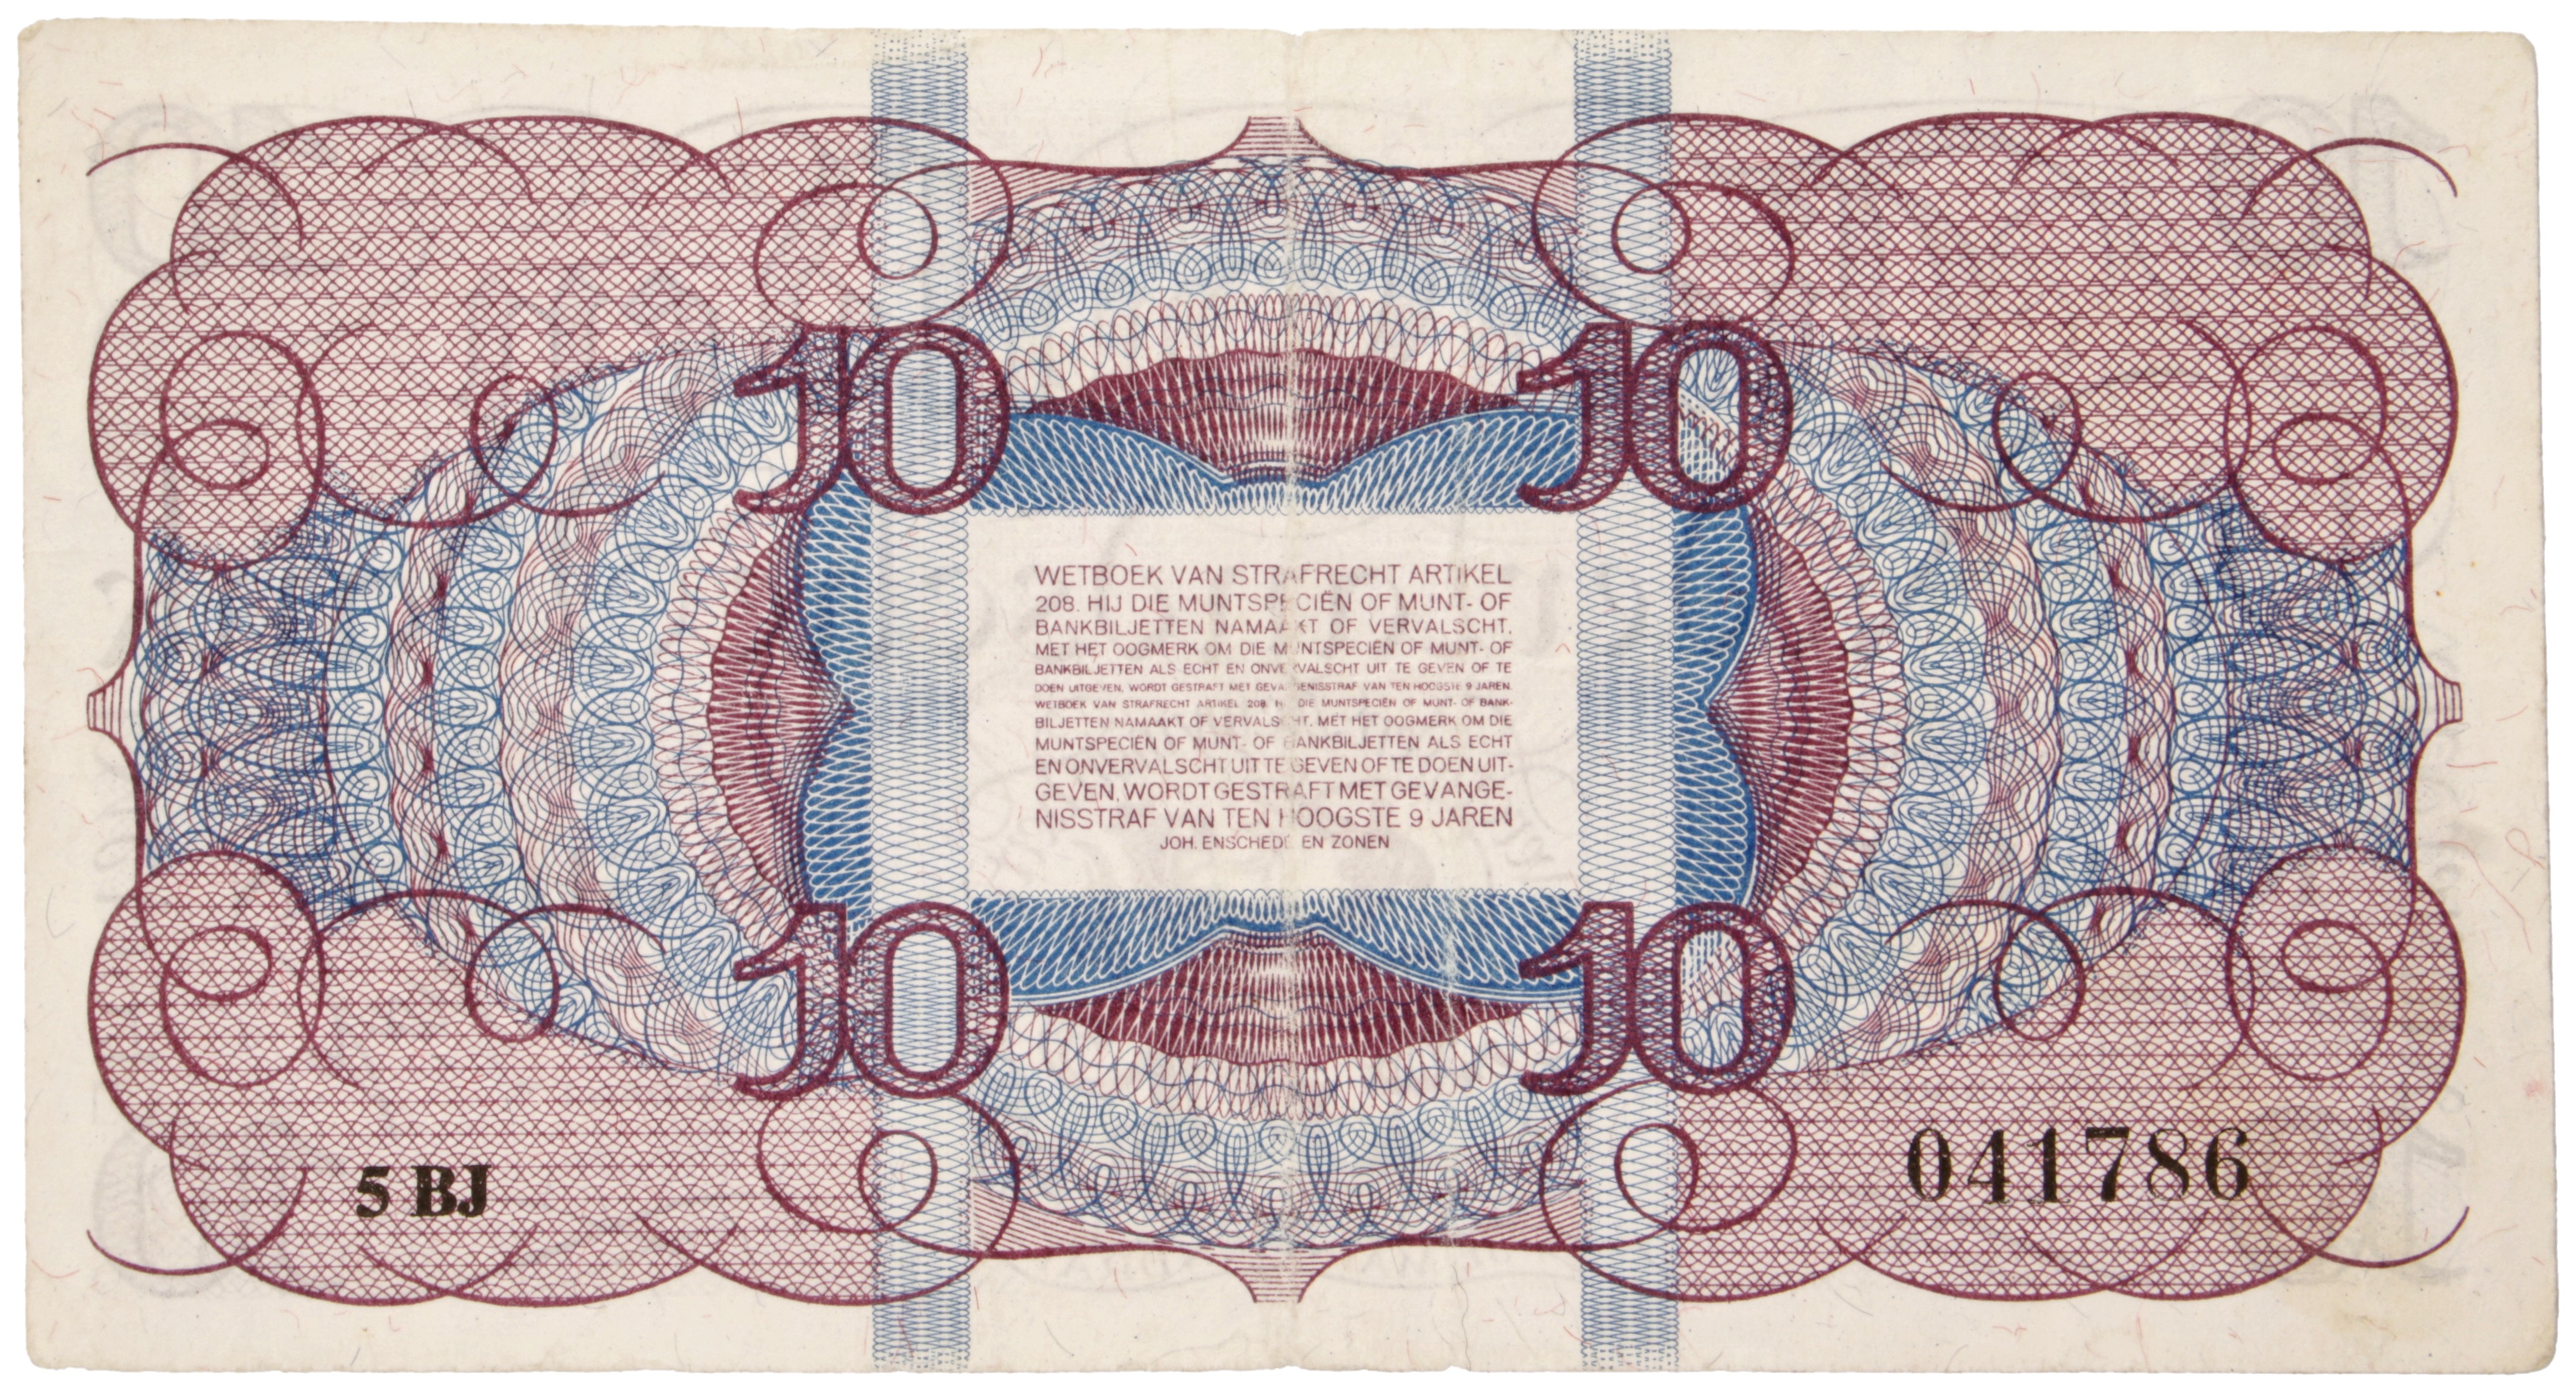 Nederland. 10 Gulden. Bankbiljet. Type 1945. Type Lieftincktientje. - Zeer Fraai / Prachtig.